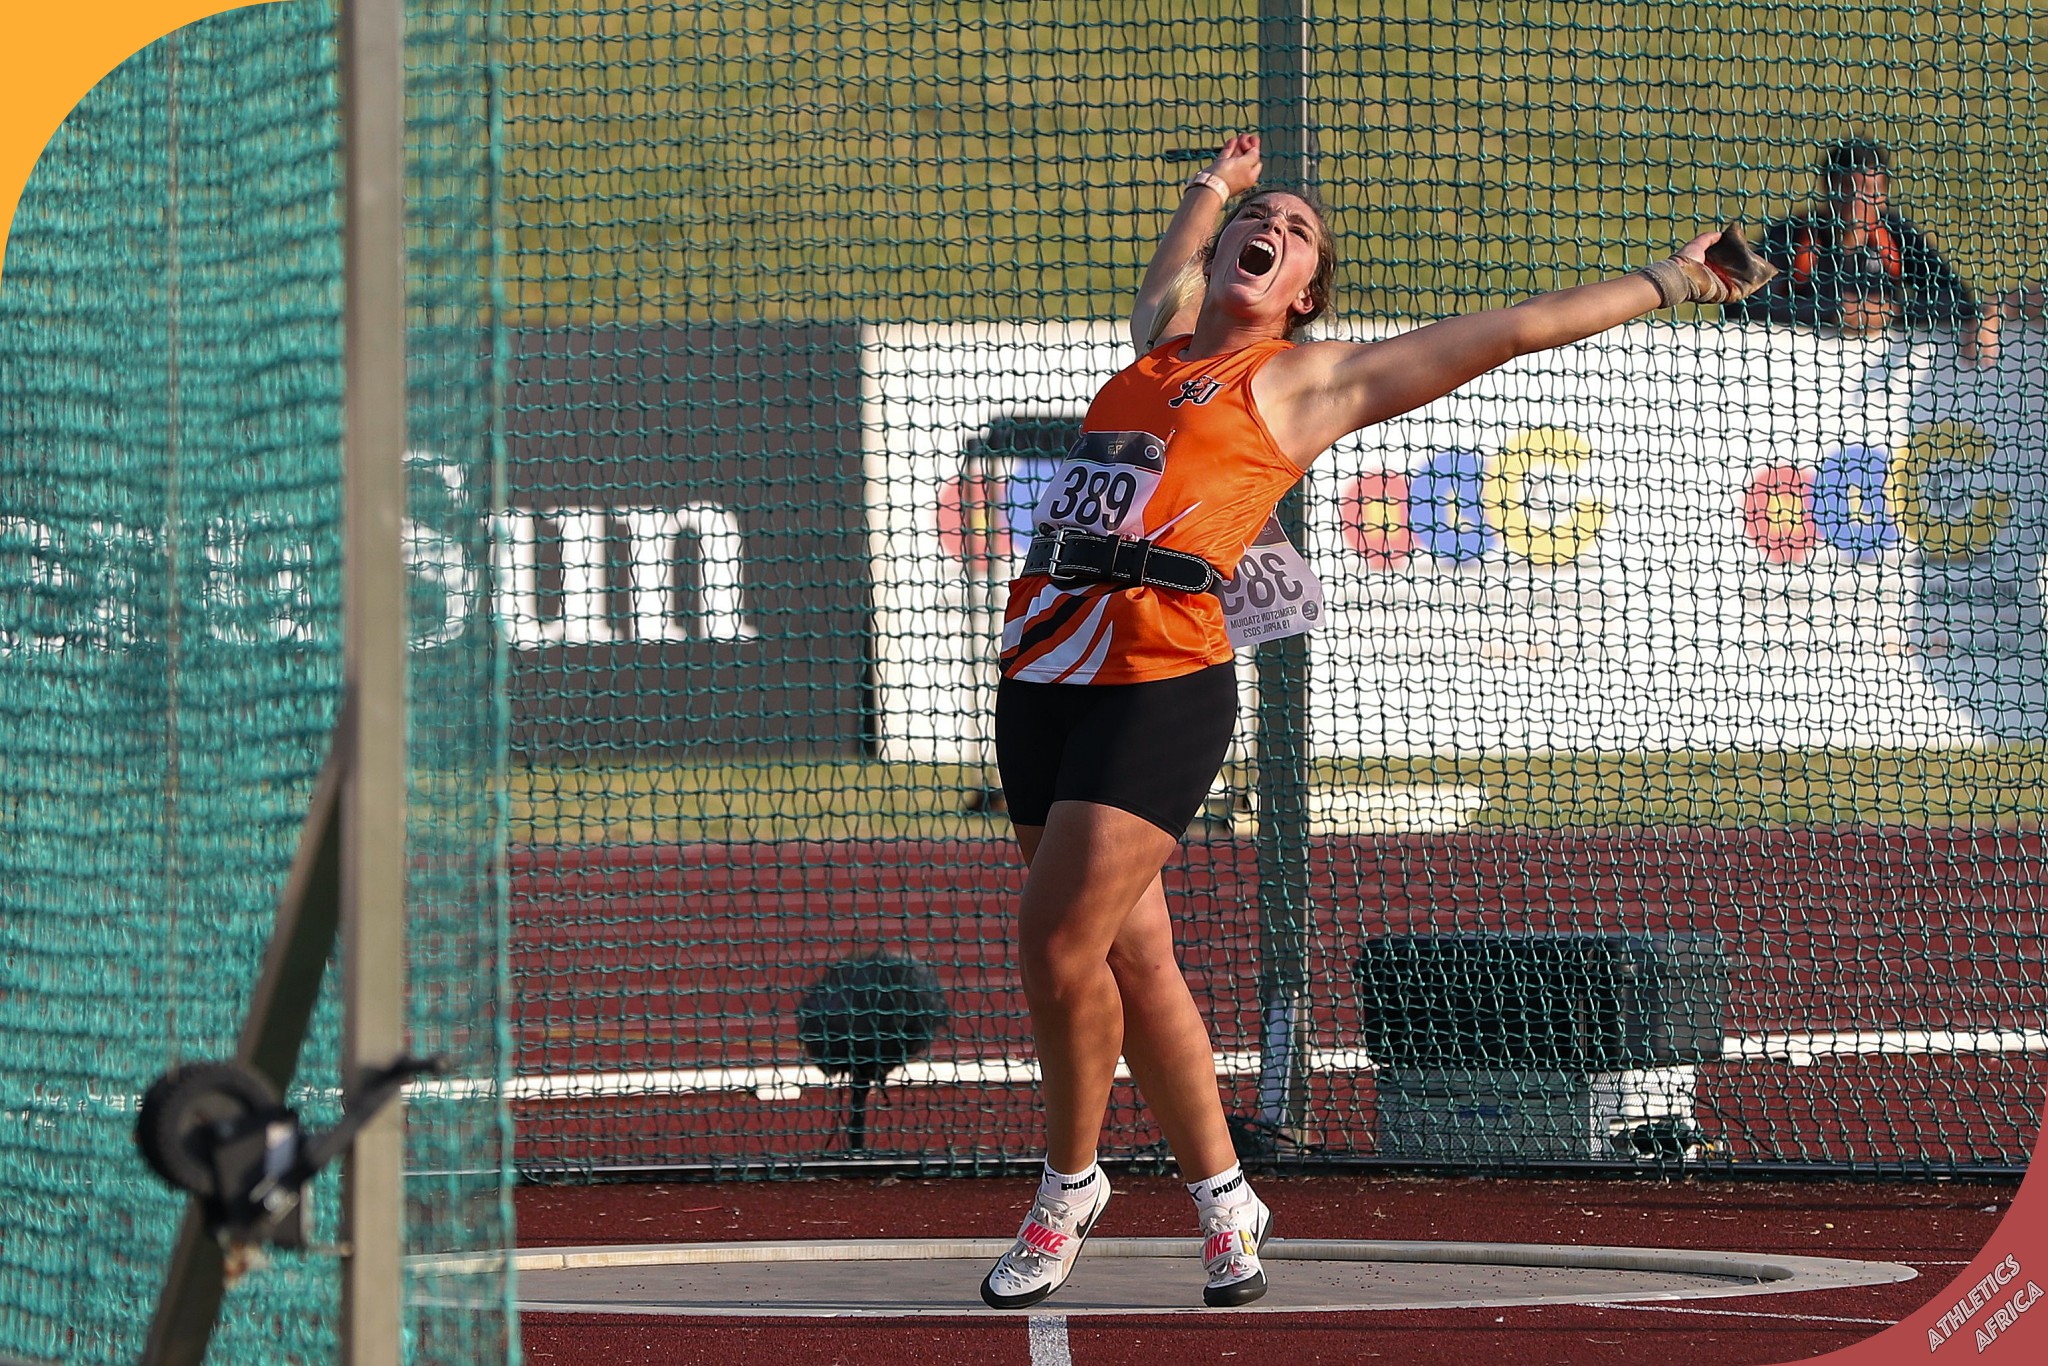 Leandri Geel's national record hammer throw scream. Photo credit: Cecilia van Bers